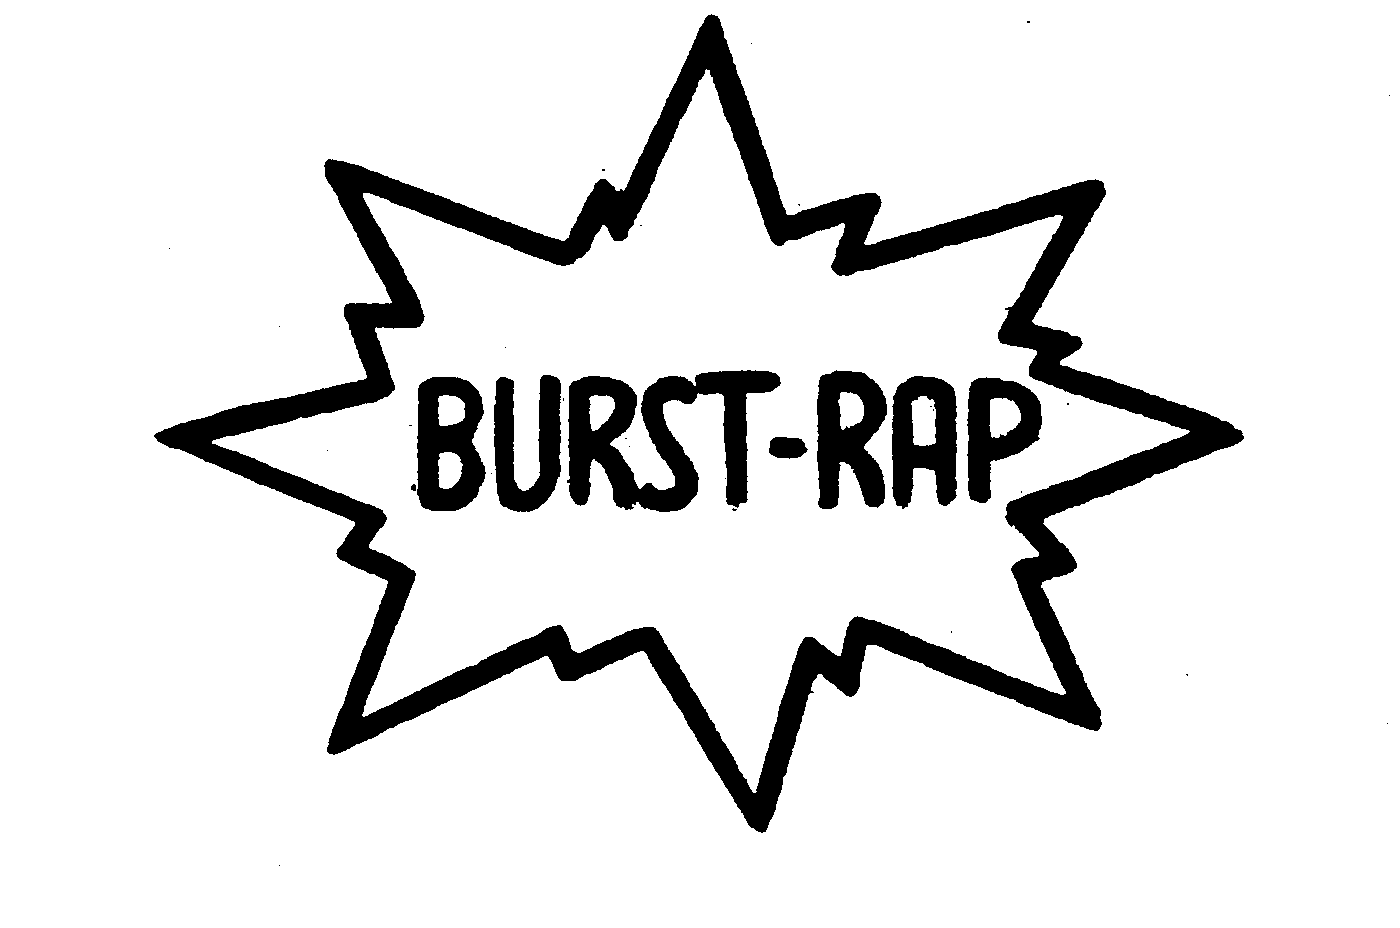  BURST-RAP